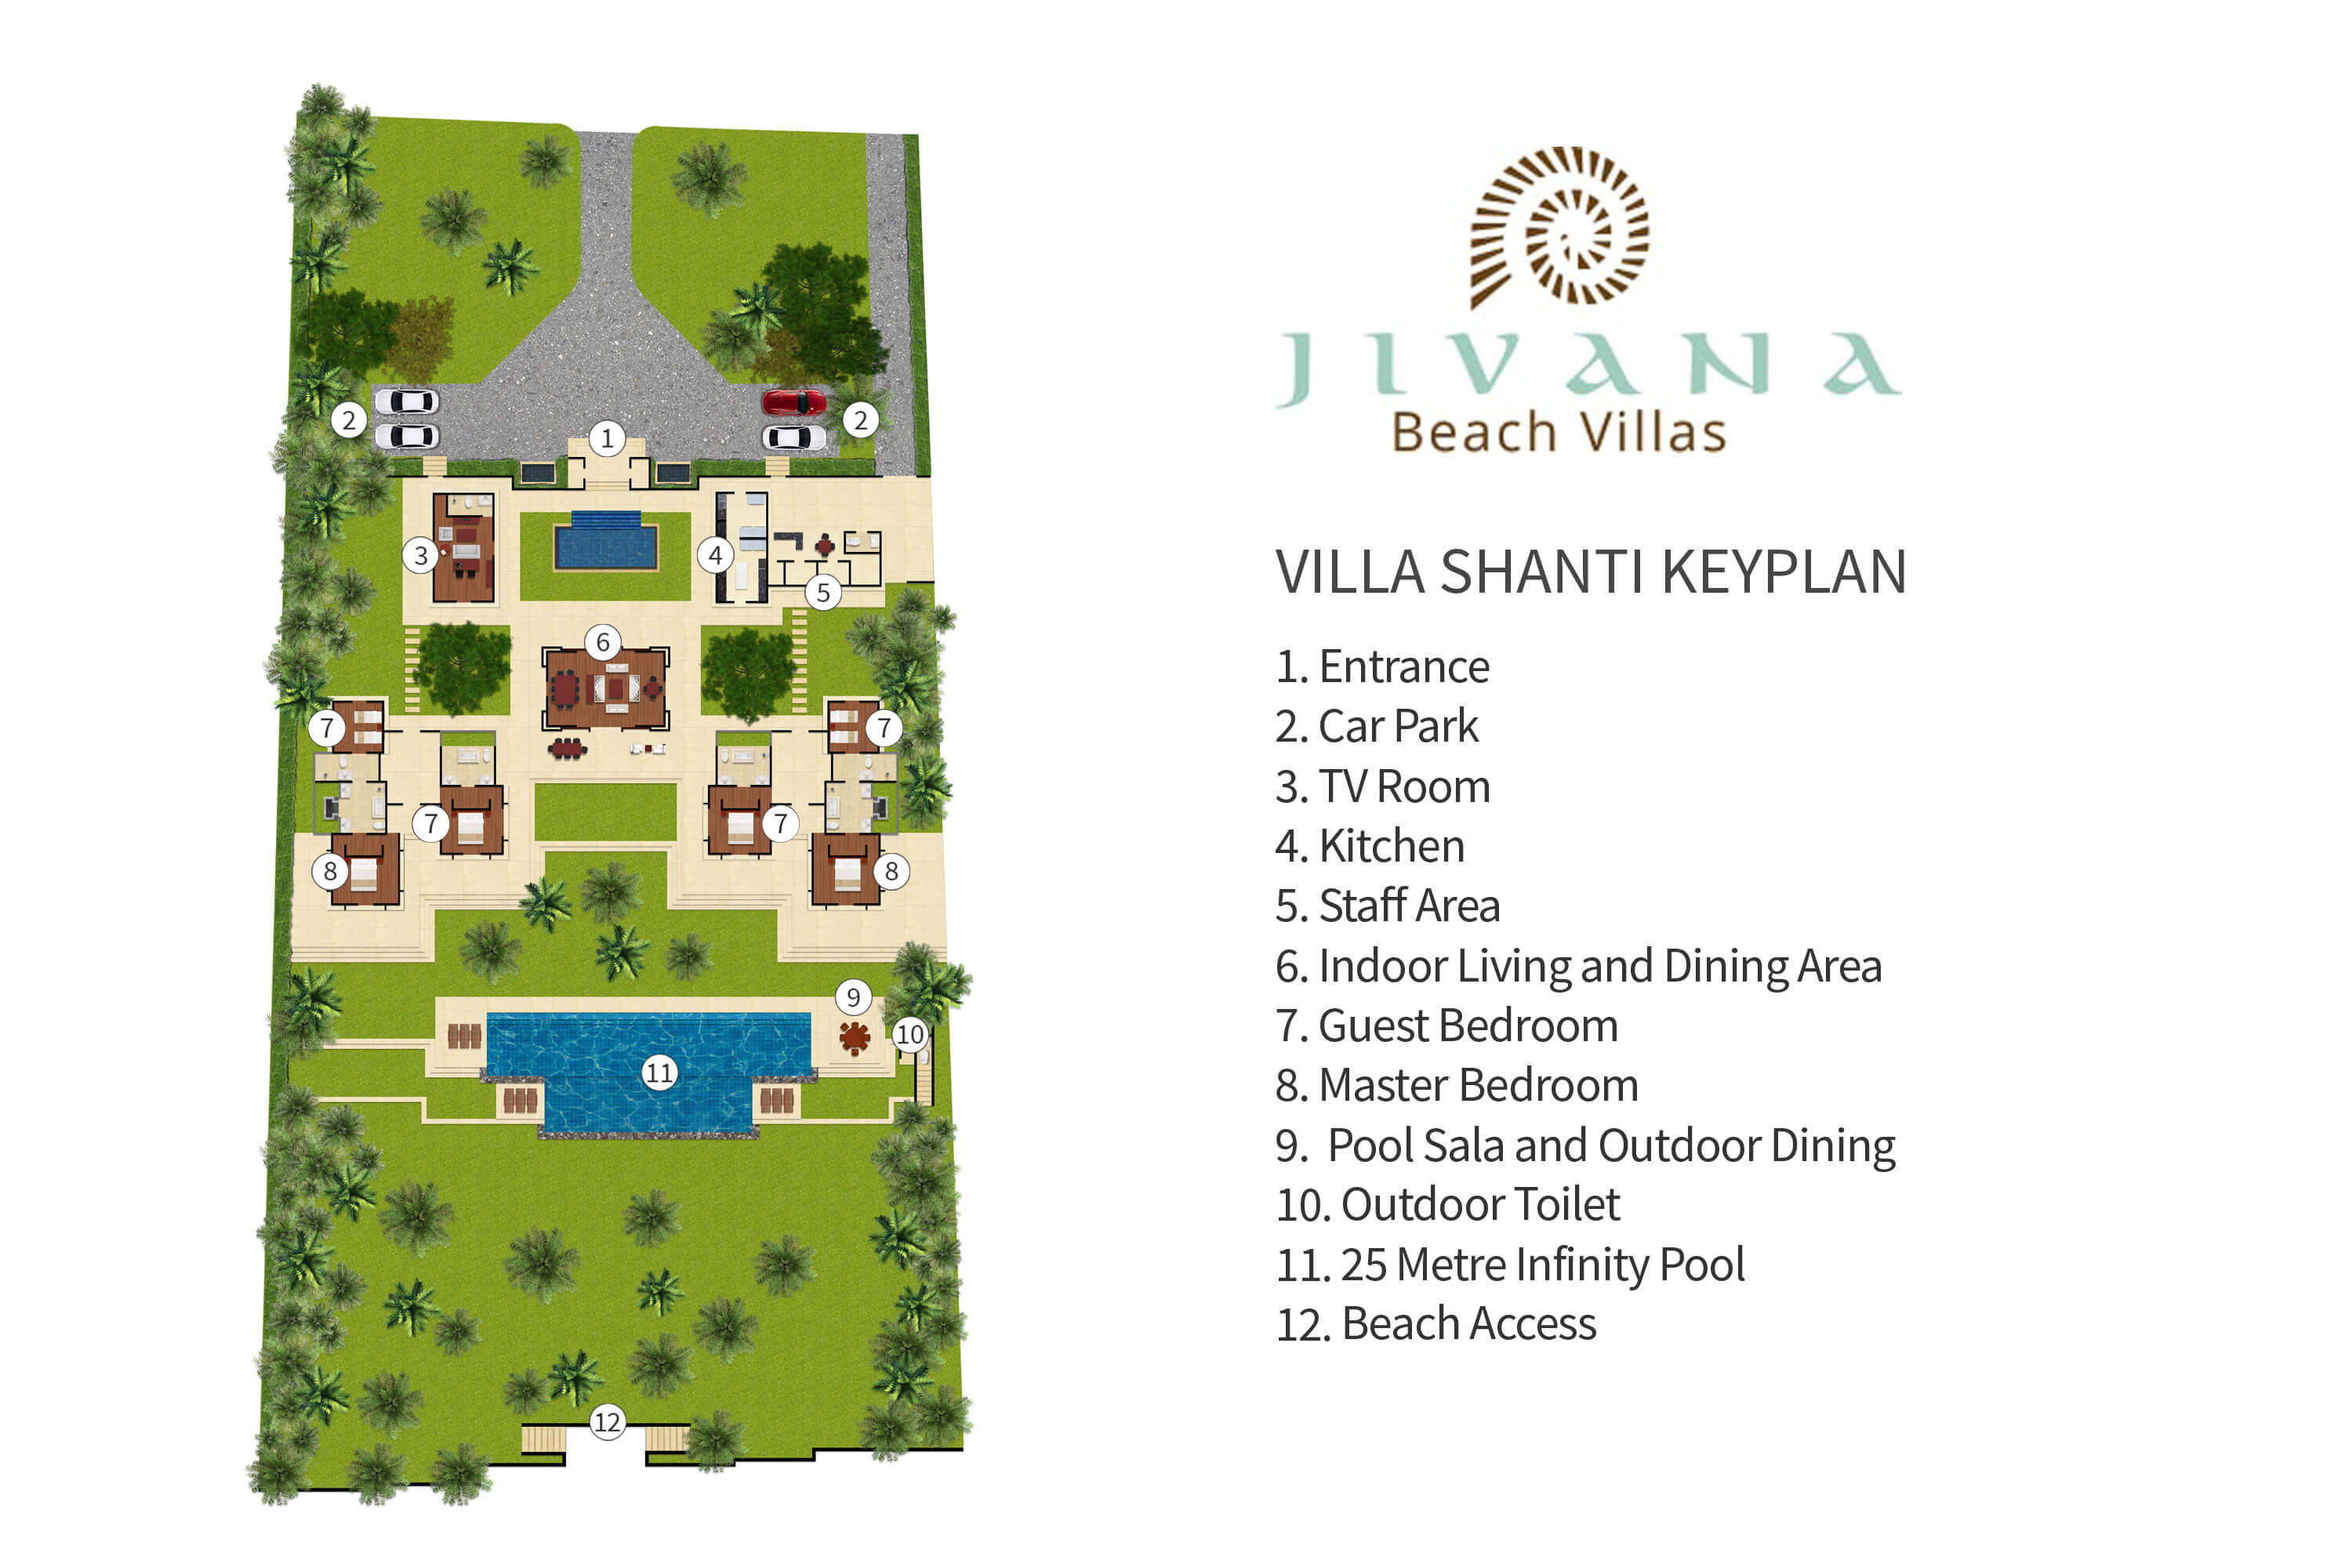 Jivana Beach Villas - Villa Shanti